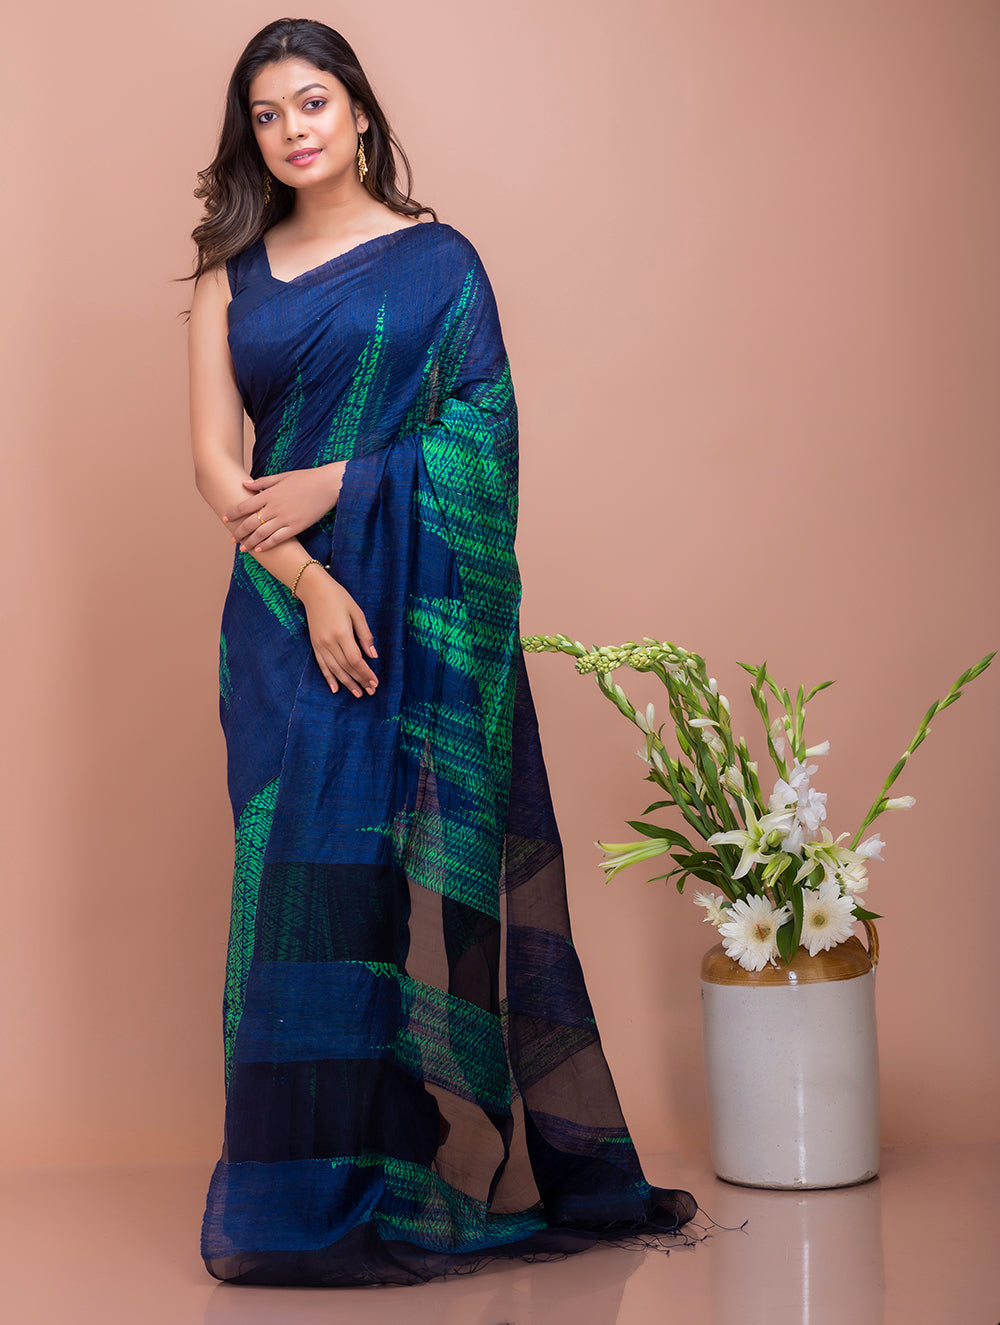 Load image into Gallery viewer, Elegant Bengal Handwoven Matka Silk Shibori Saree - Navy Blue &amp; Green